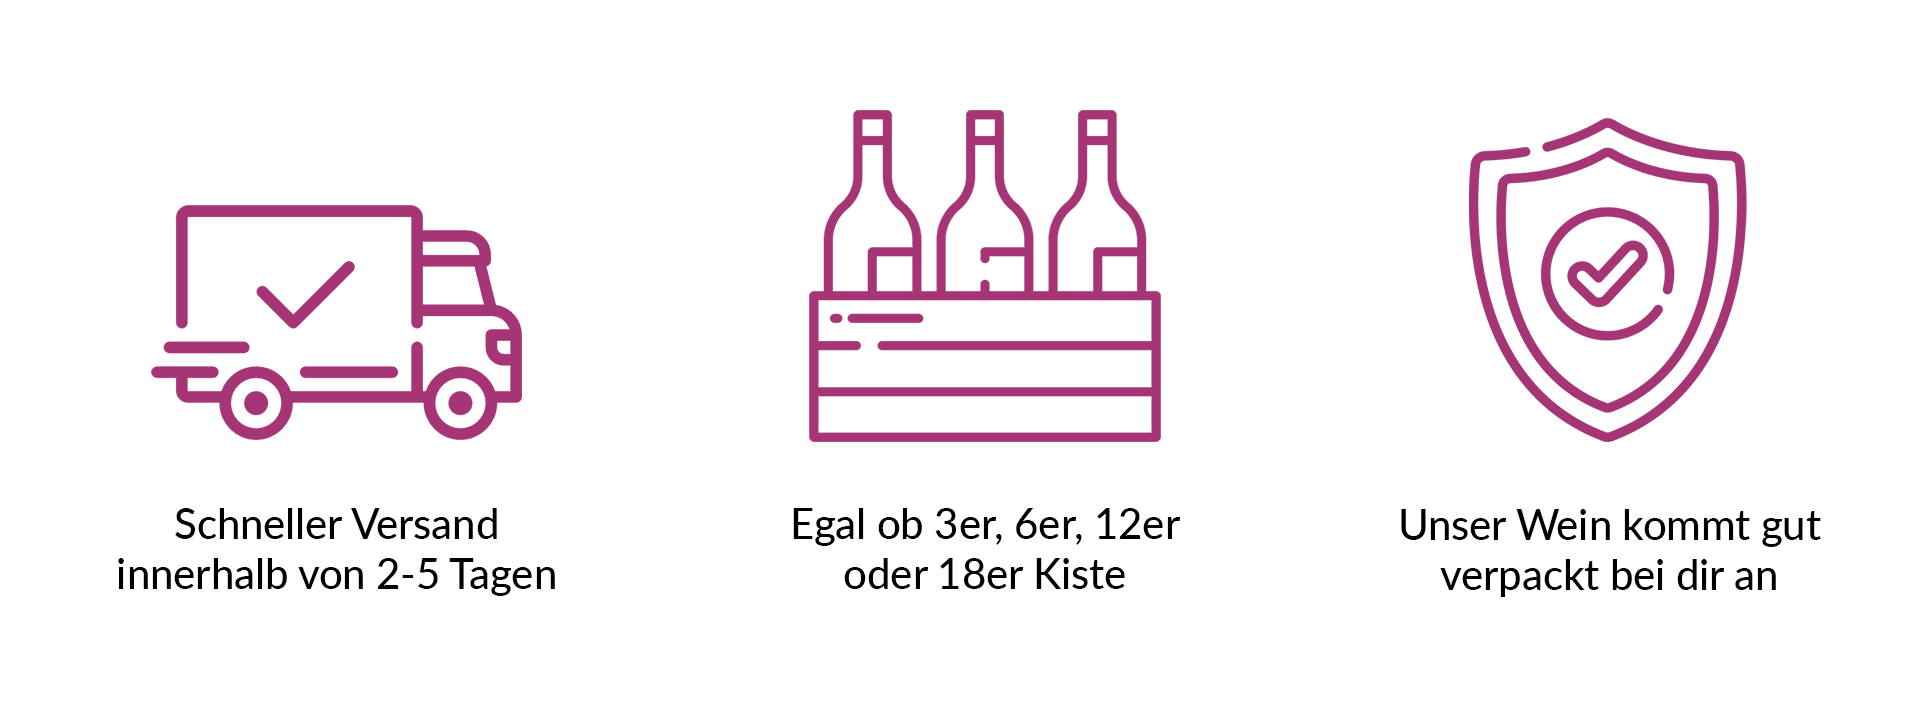 Versandinfo - Weingut Loersch. Top Rieslinge zum Verschicken